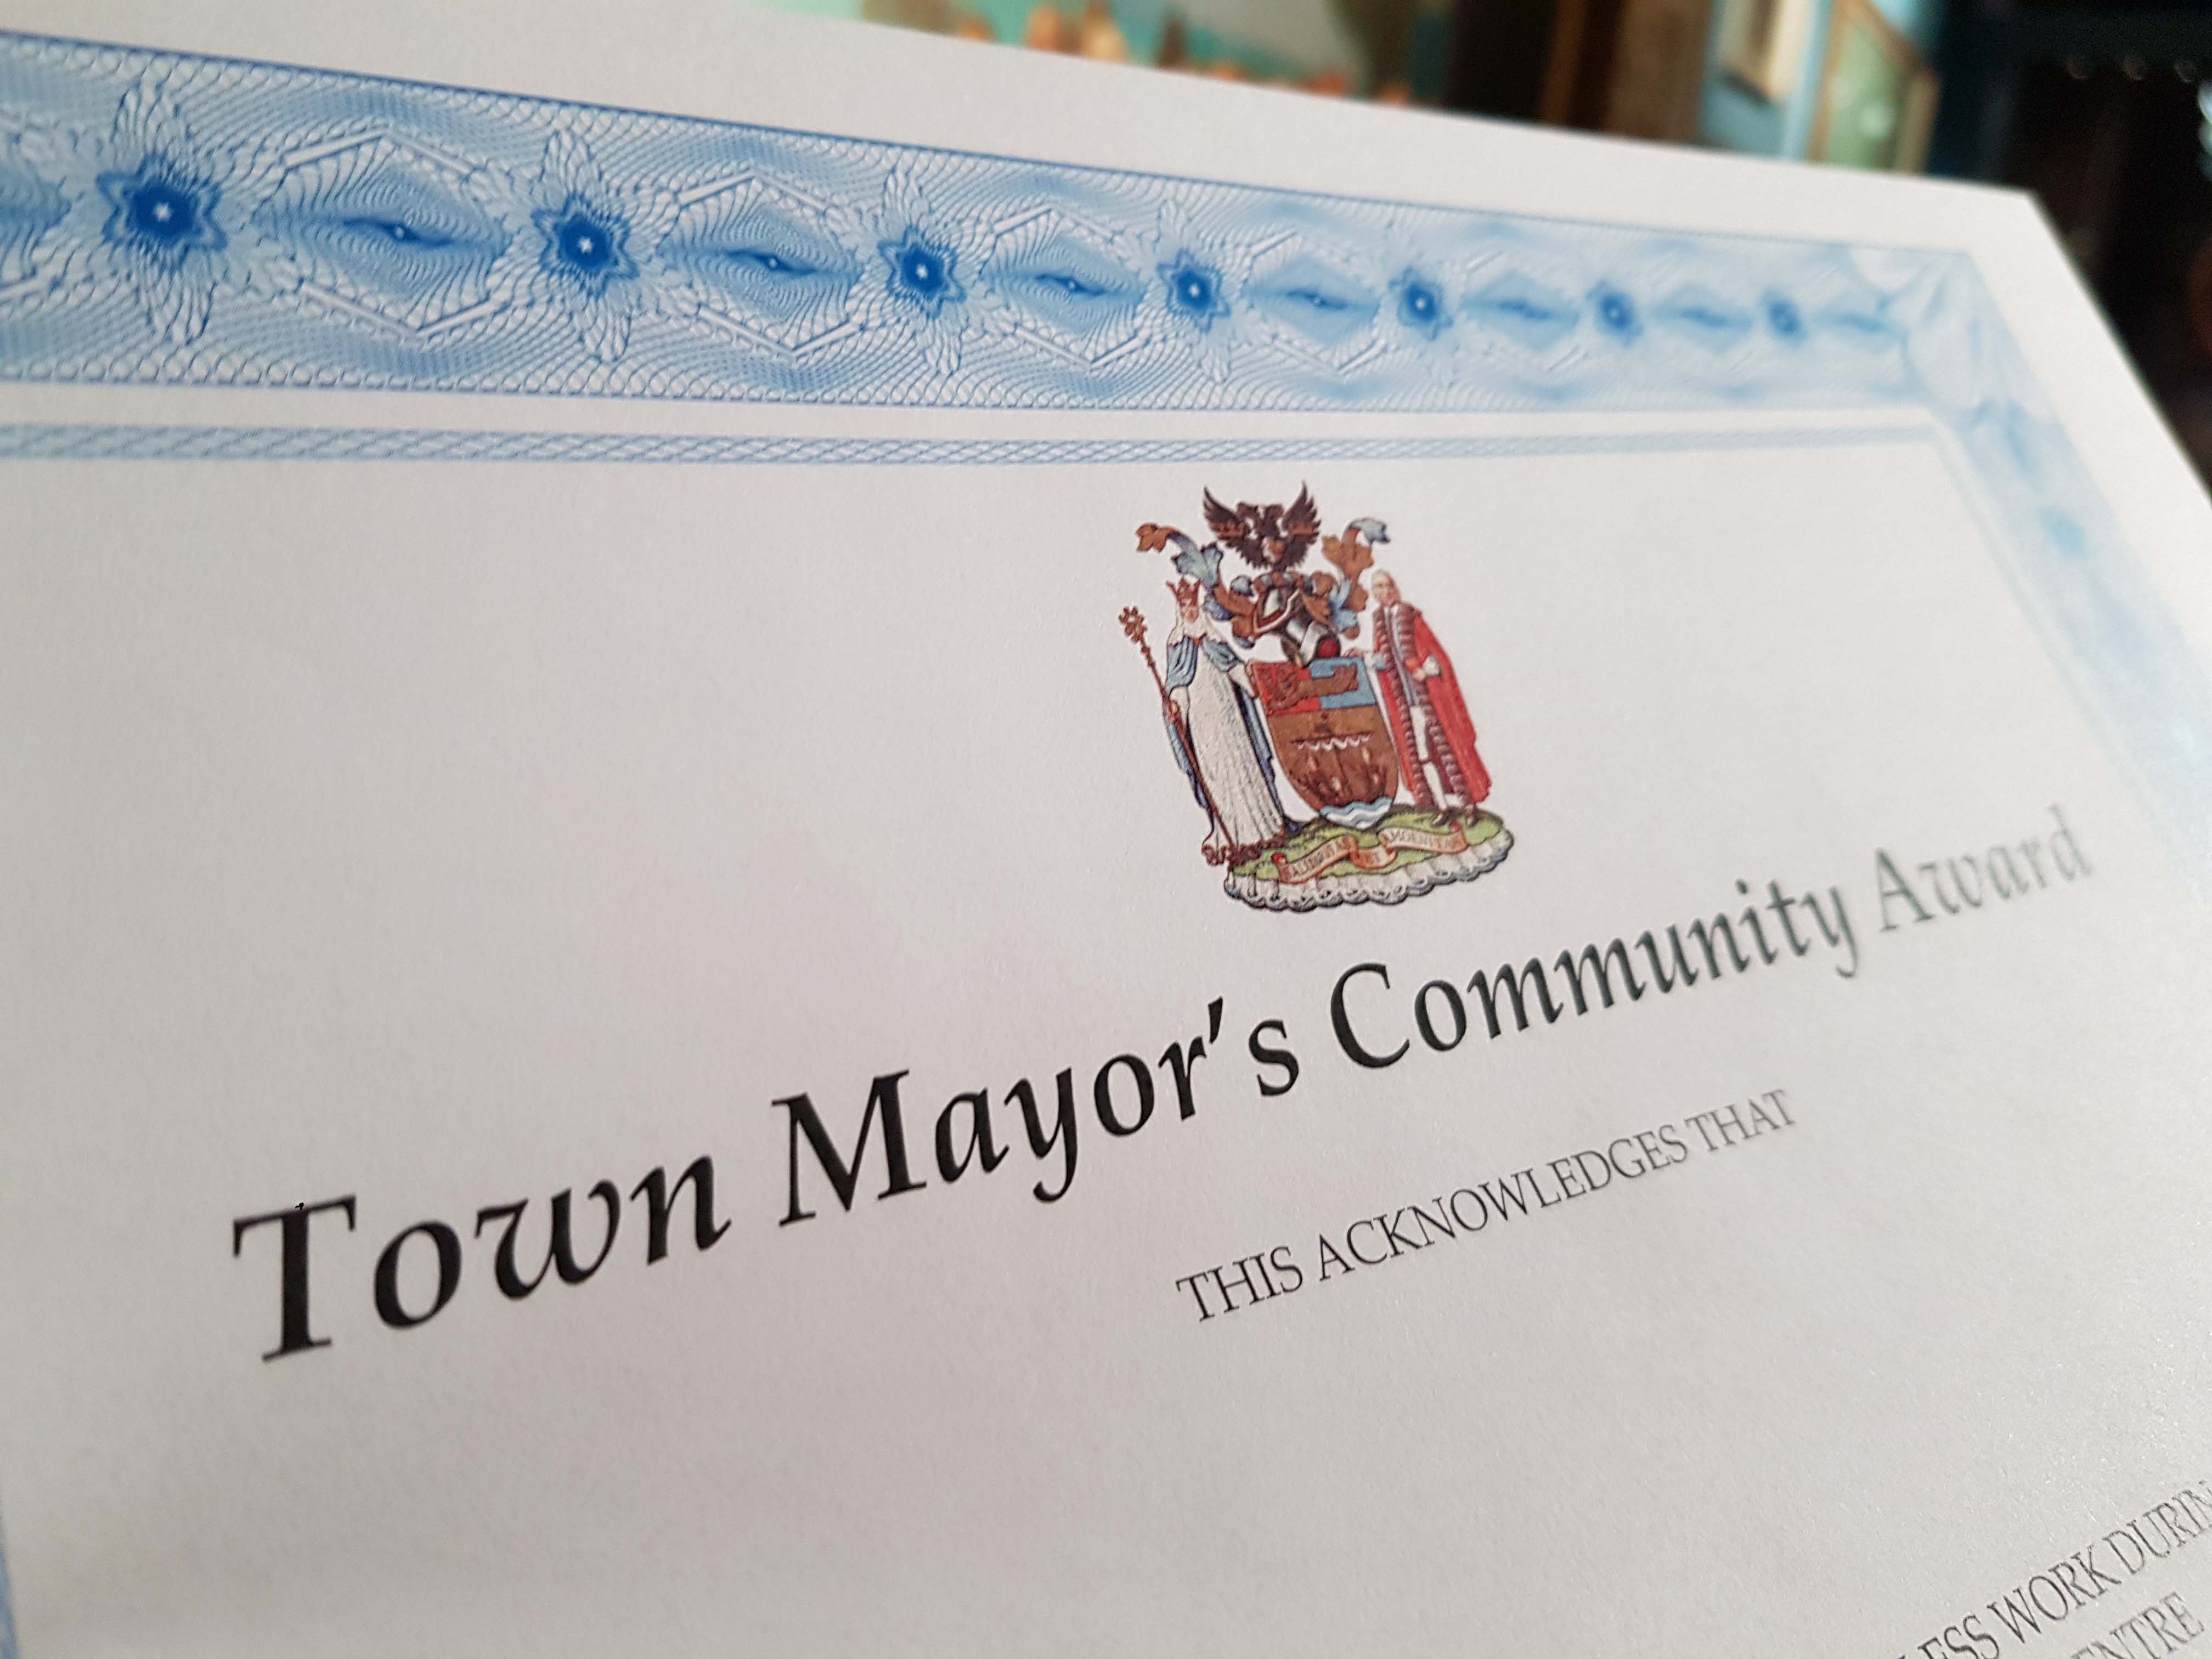 Town Mayors Community Awards